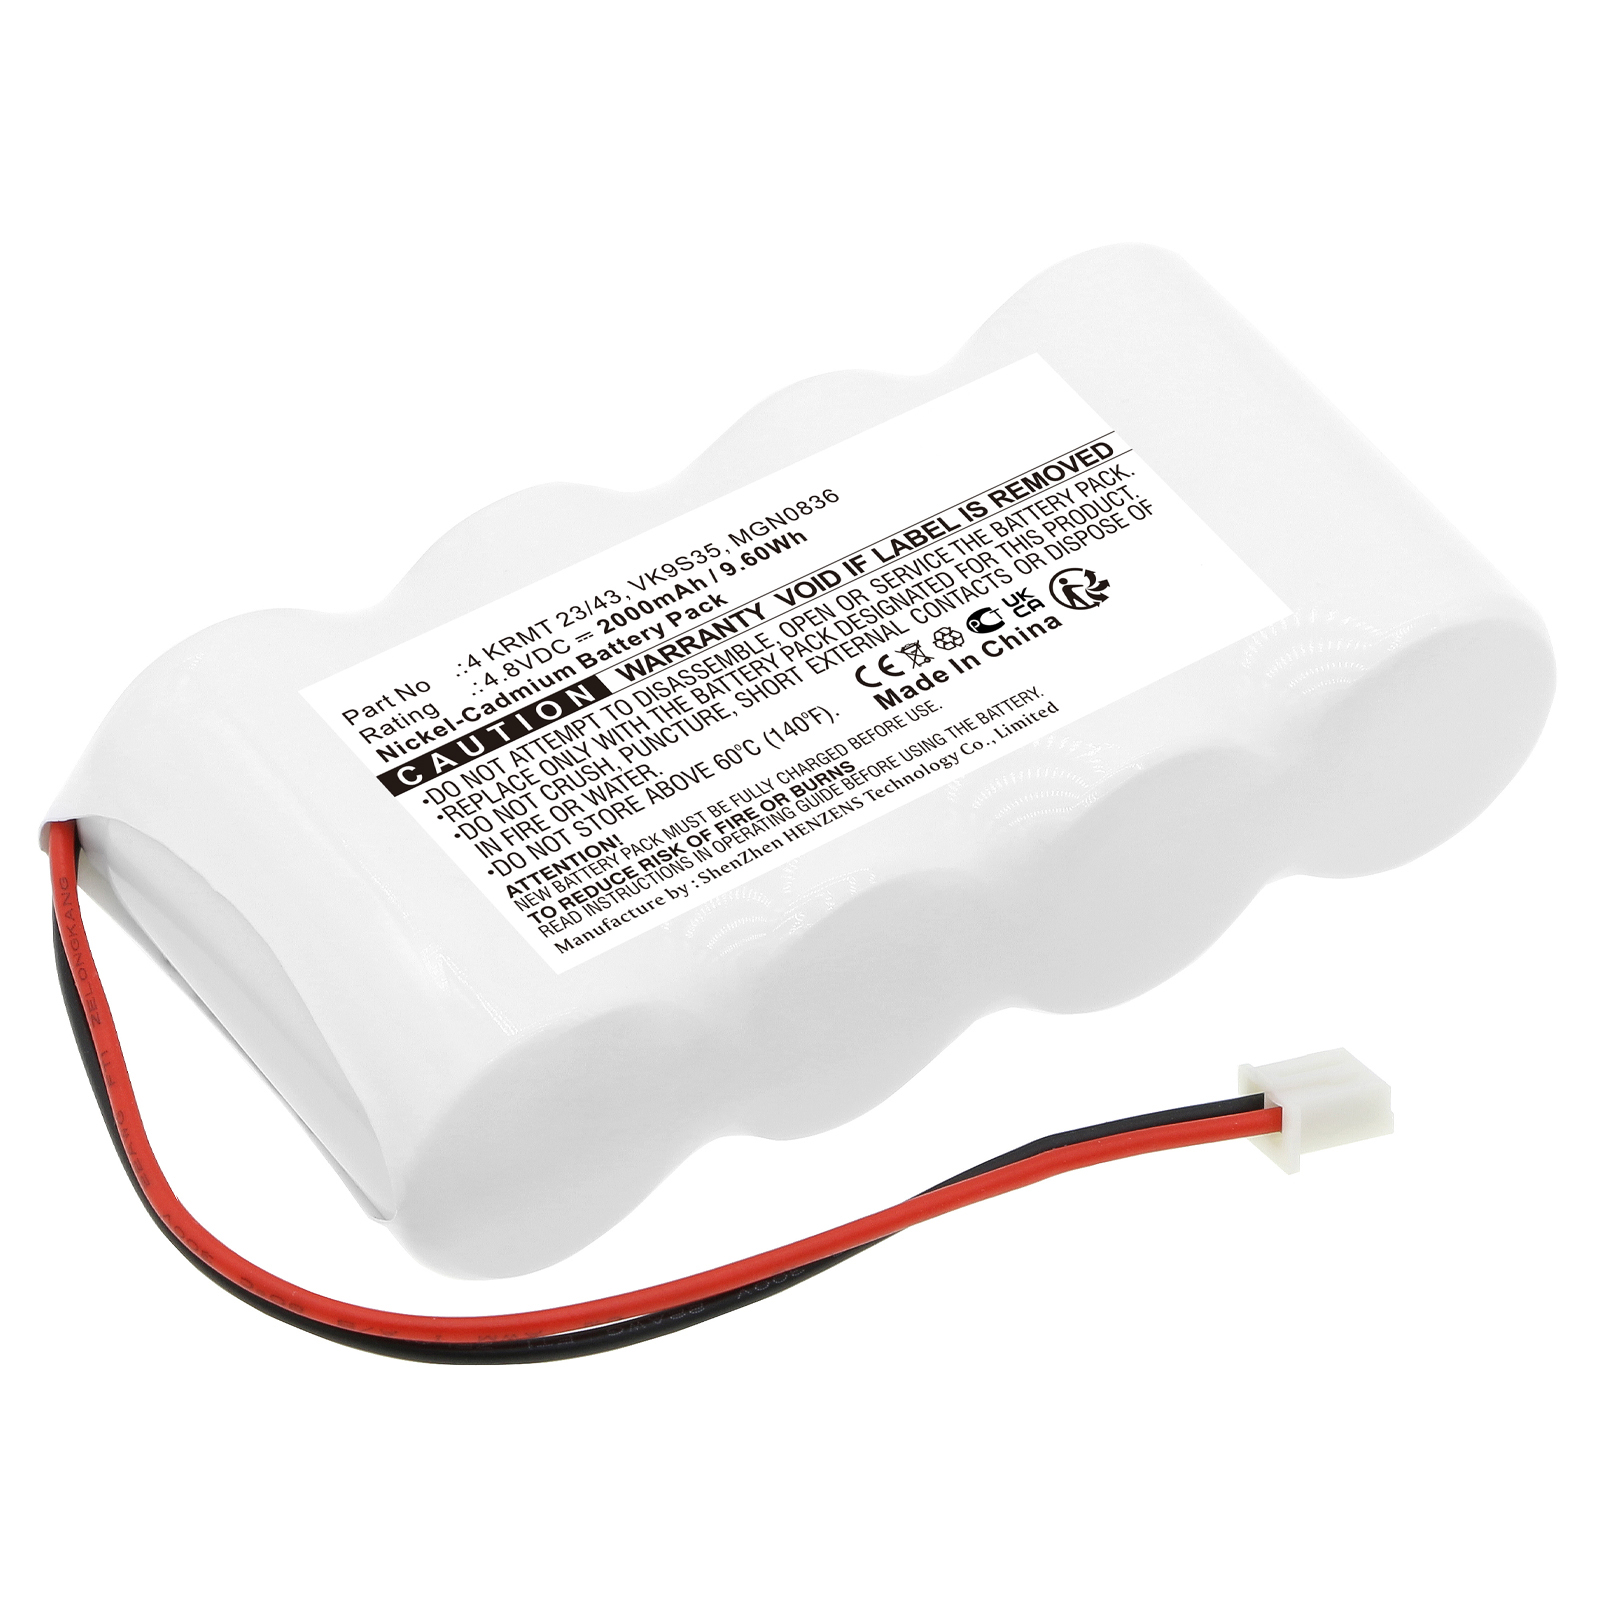 Synergy Digital Emergency Lighting Battery, Compatible with Legrand HB00006TA Emergency Lighting Battery (Ni-CD, 4.8V, 2000mAh)